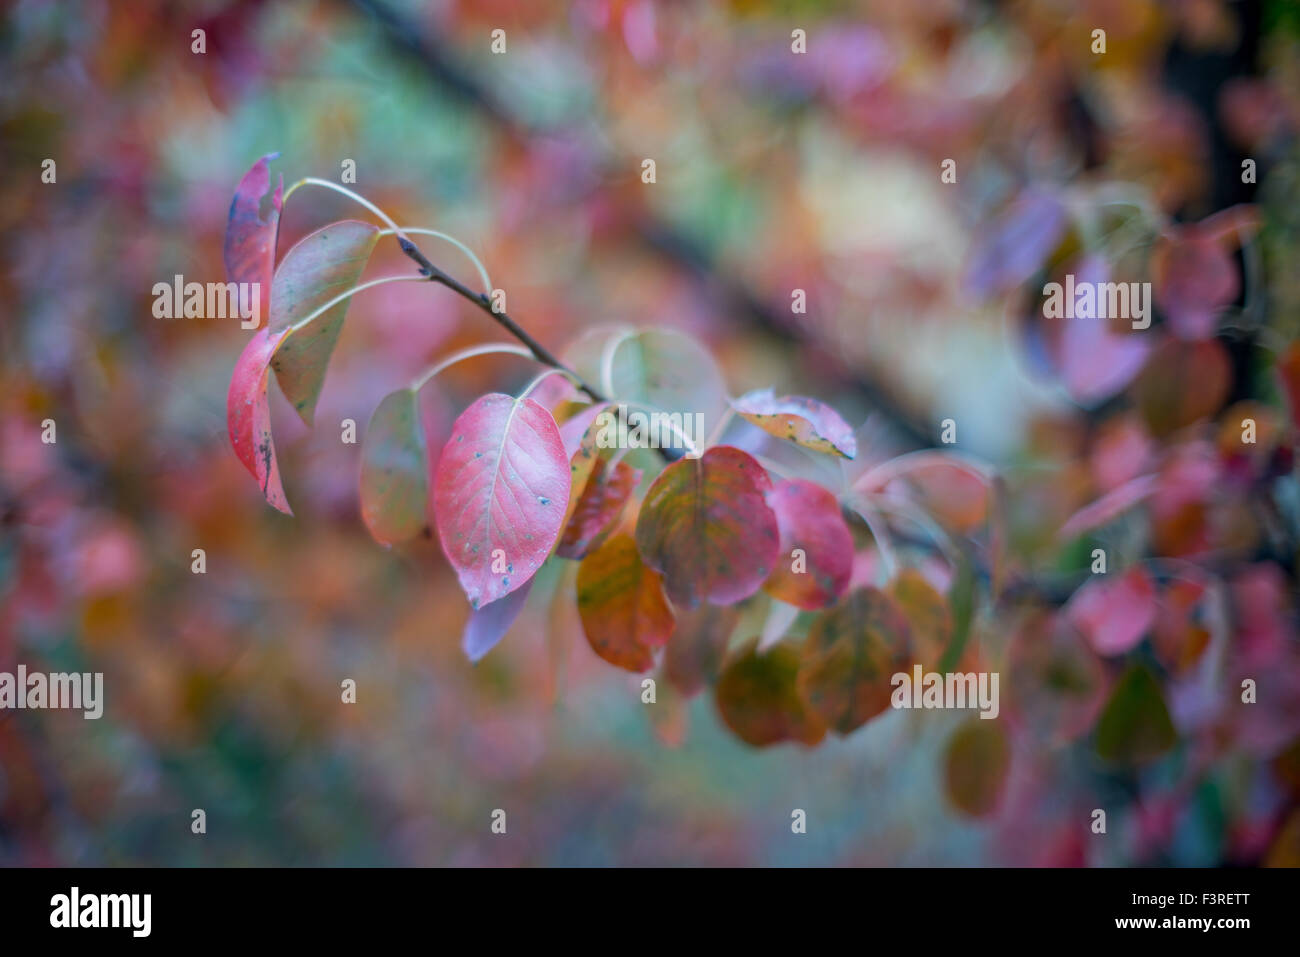 Colorful autumn fall leaves Stock Photo